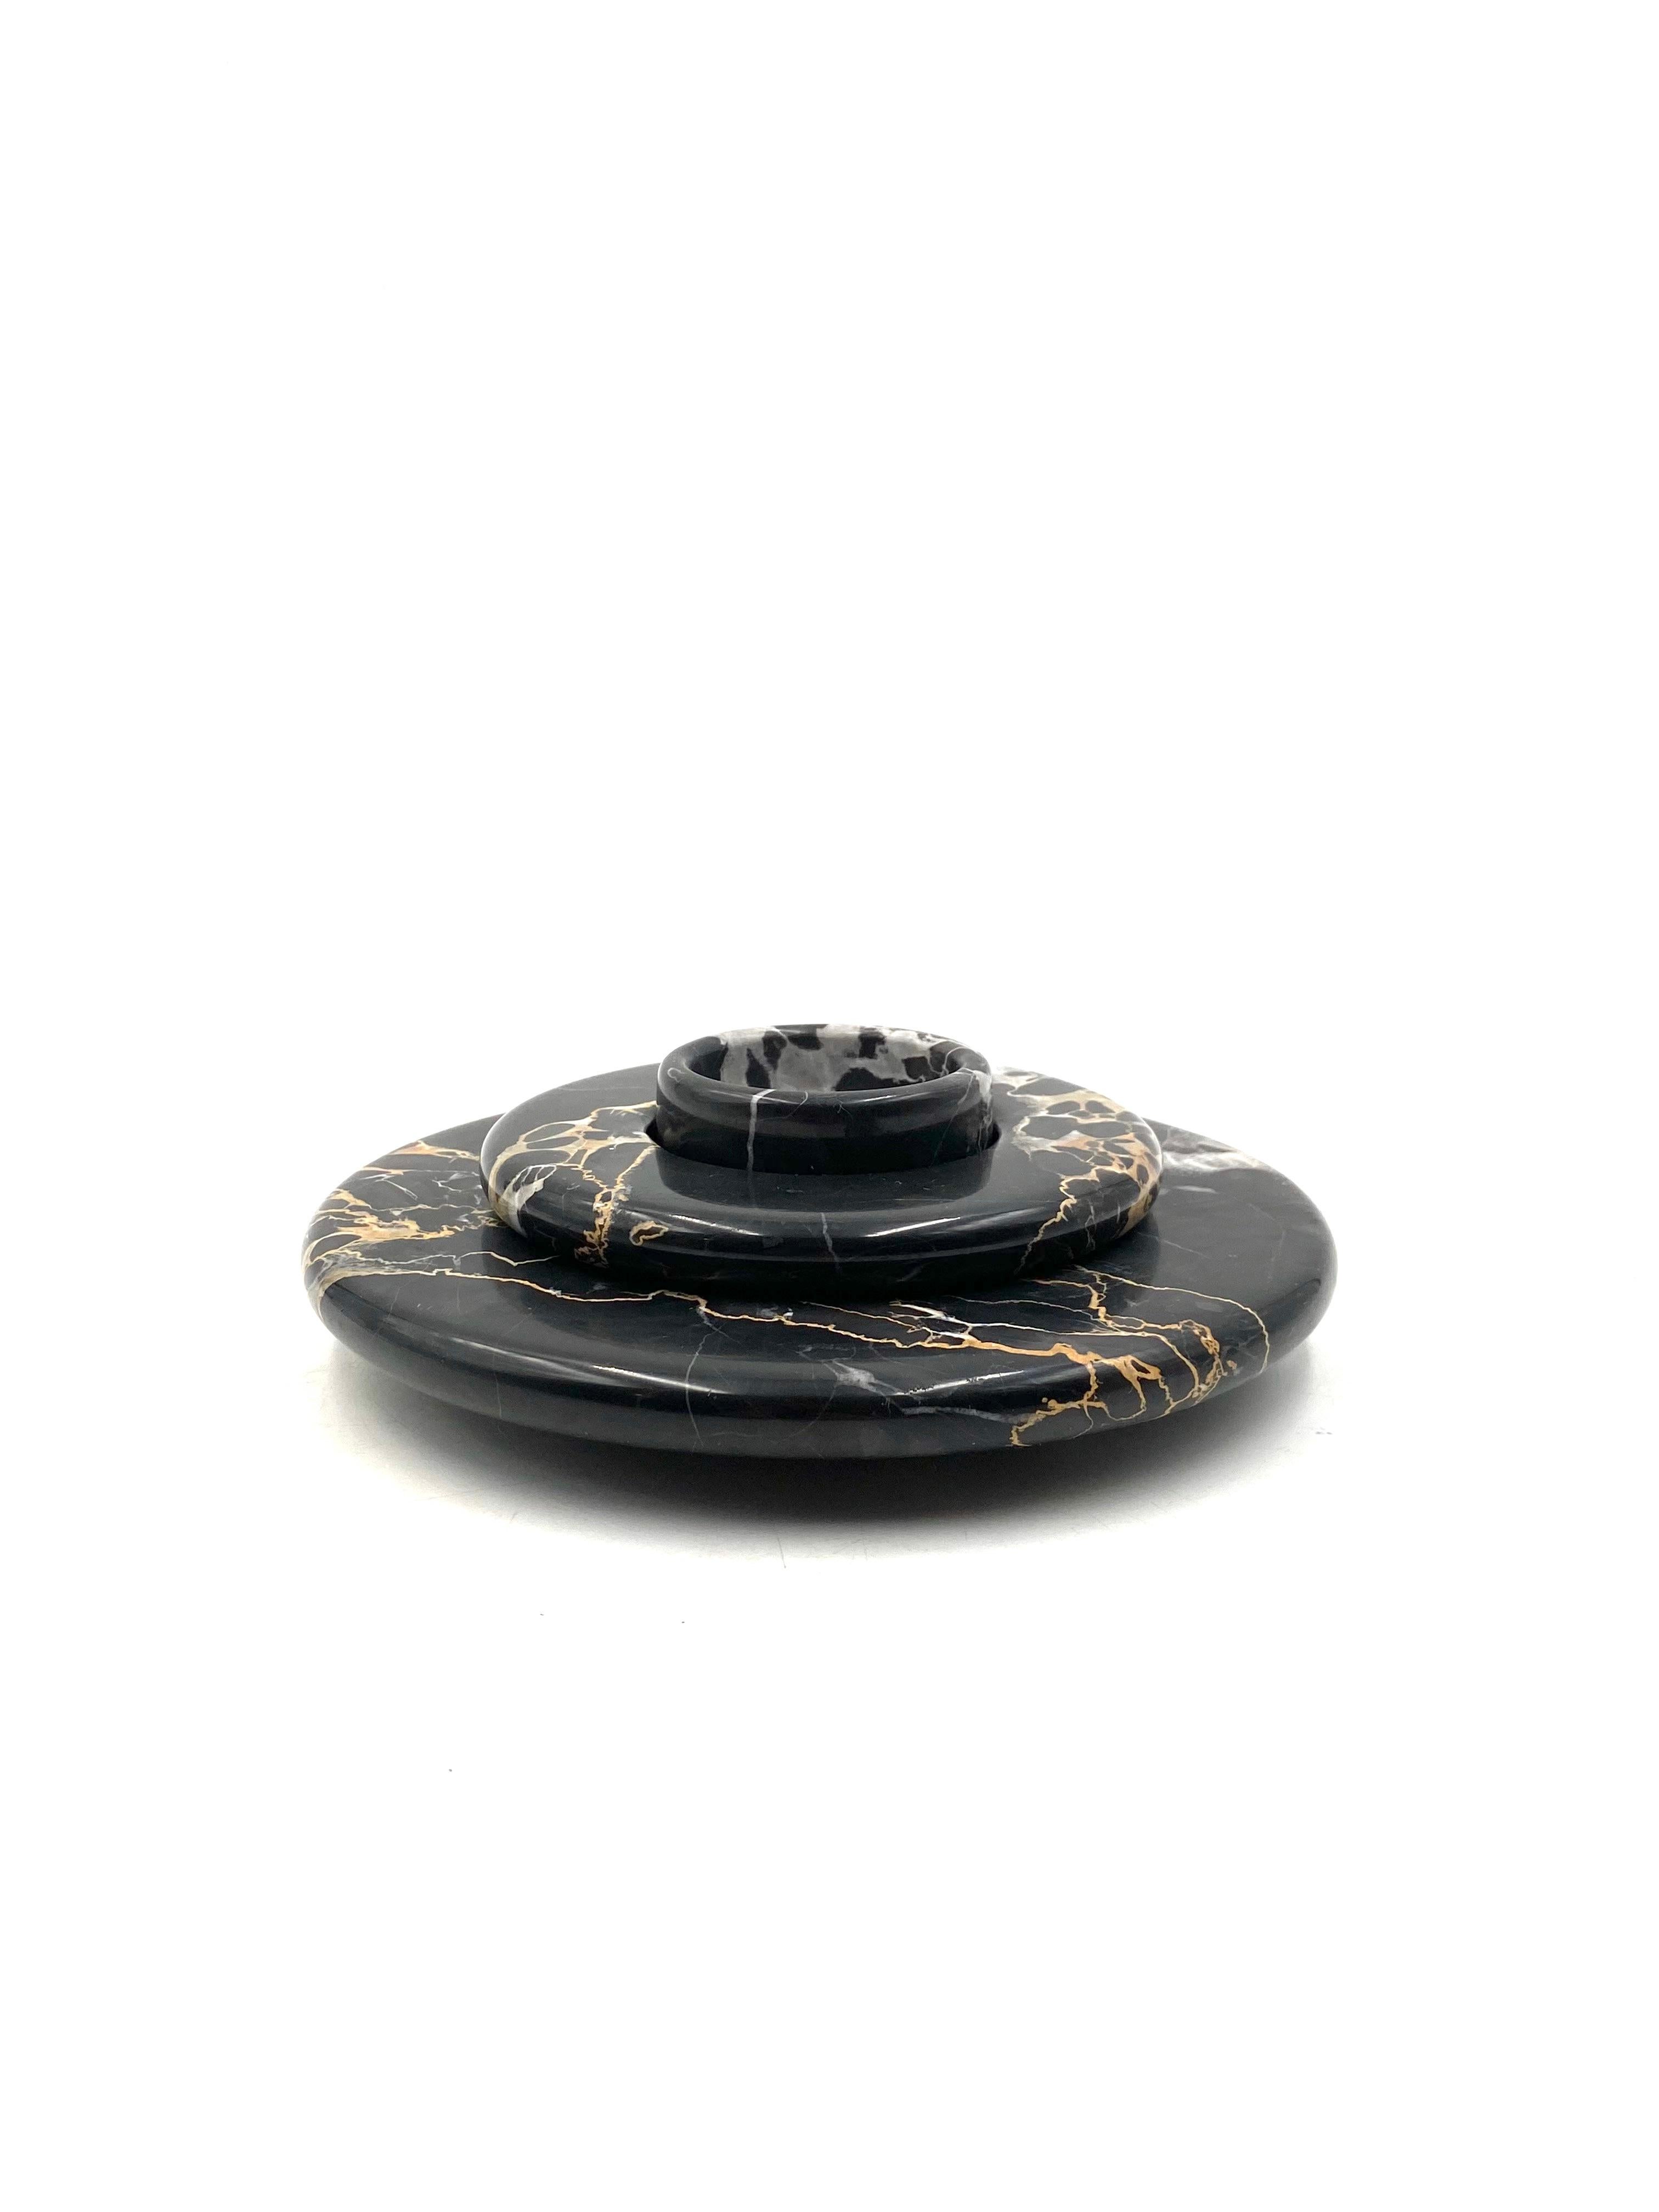 Portoro black marble centerpiece / vide poche, stacking ashtrays 

Casigliani Italy, 1970s

3 pieces

H 7.5 cm Diam. 23 cm

Conditions: excellent, no defects